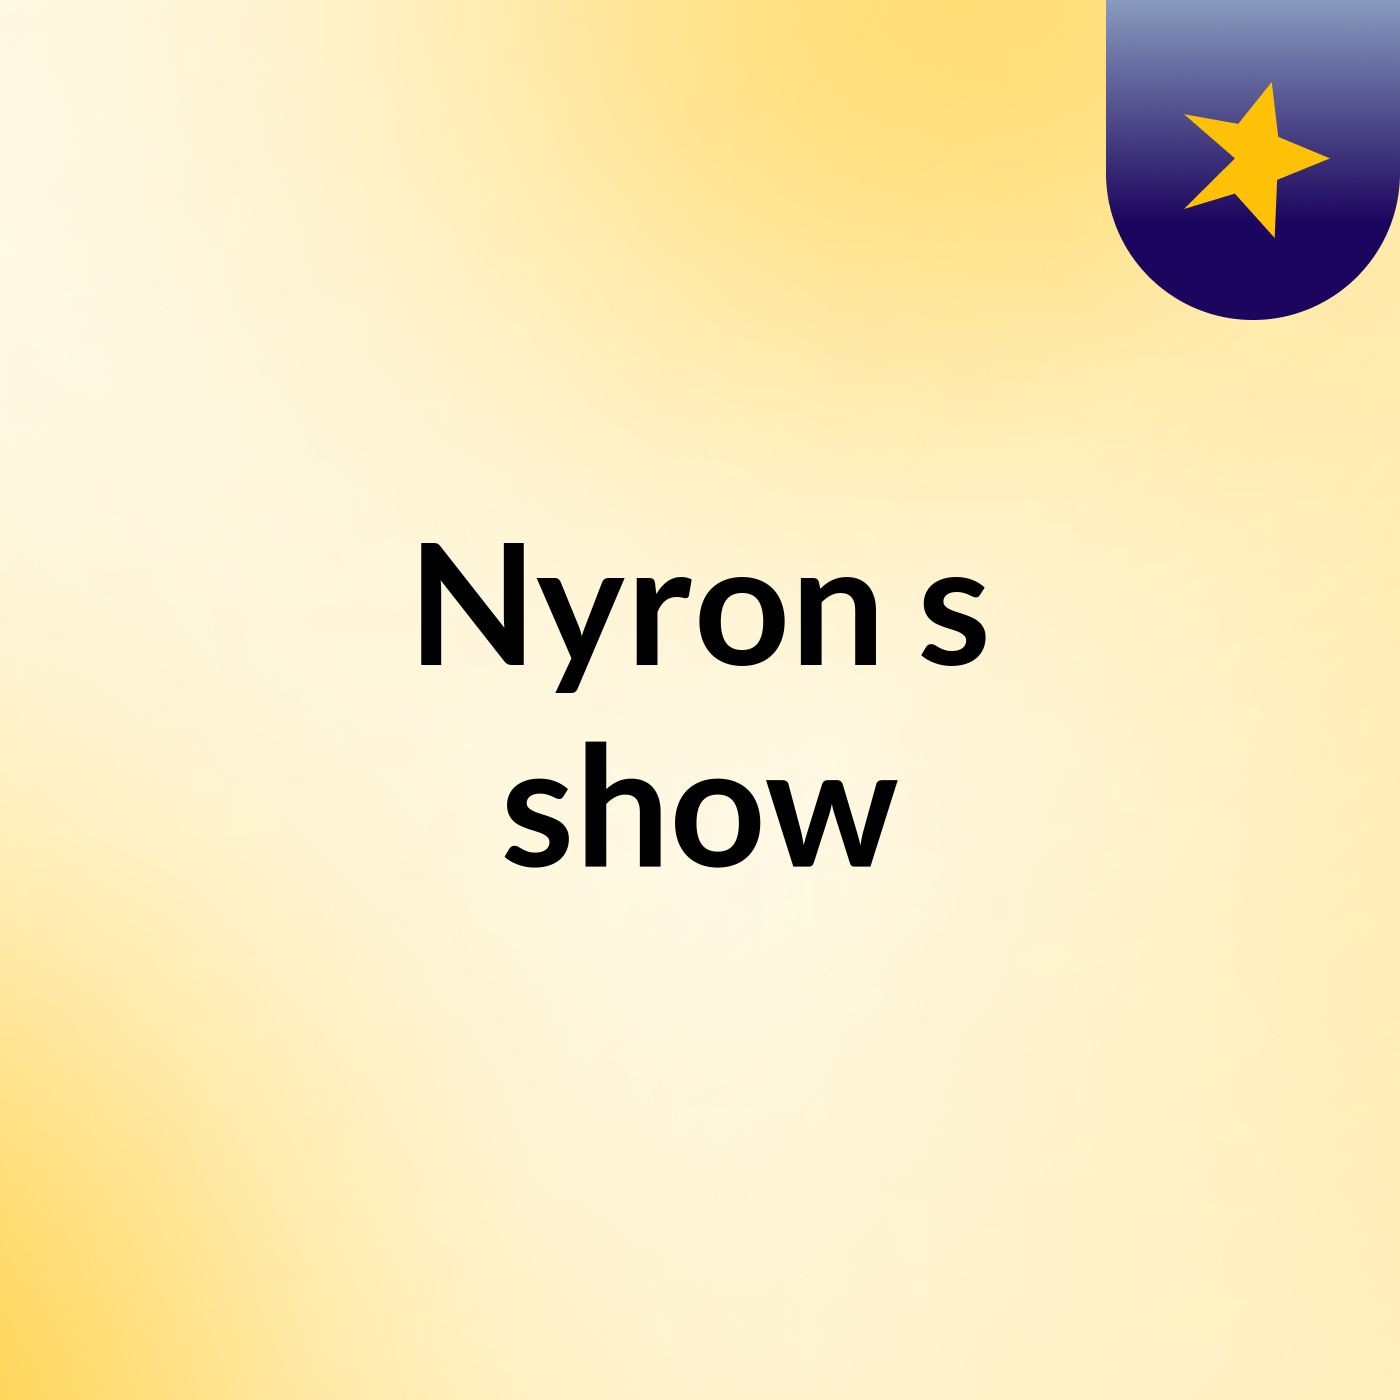 Nyron's show